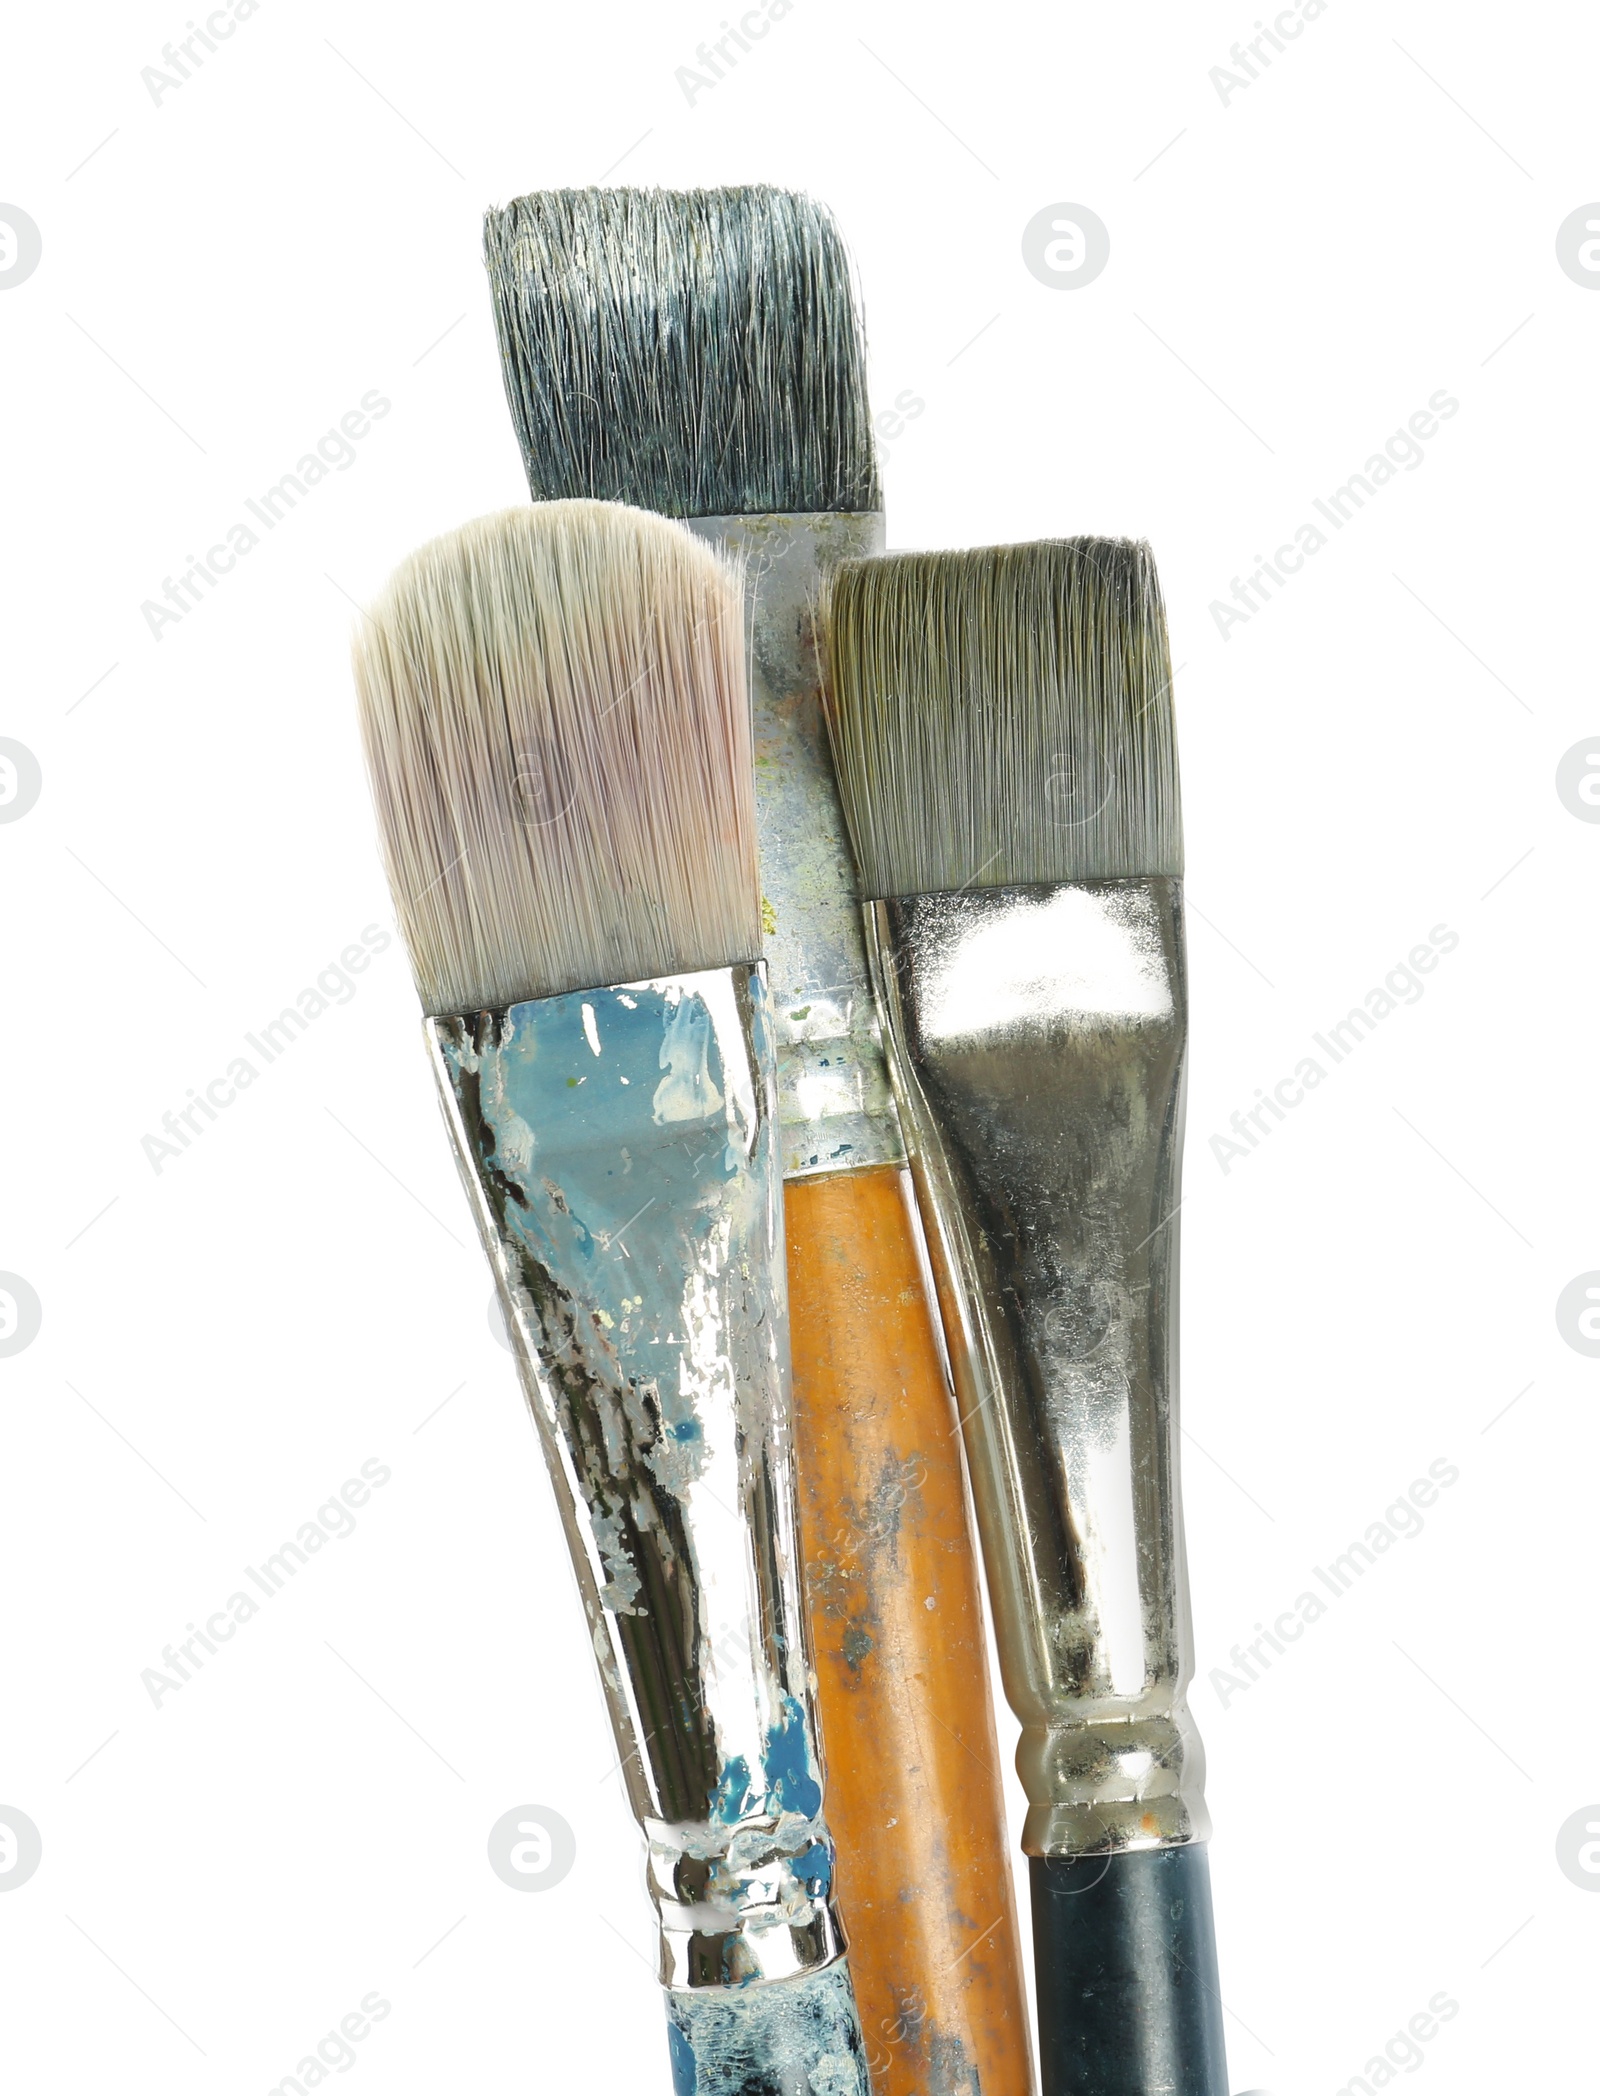 Photo of Set of paintbrushes on white background. Art supplies